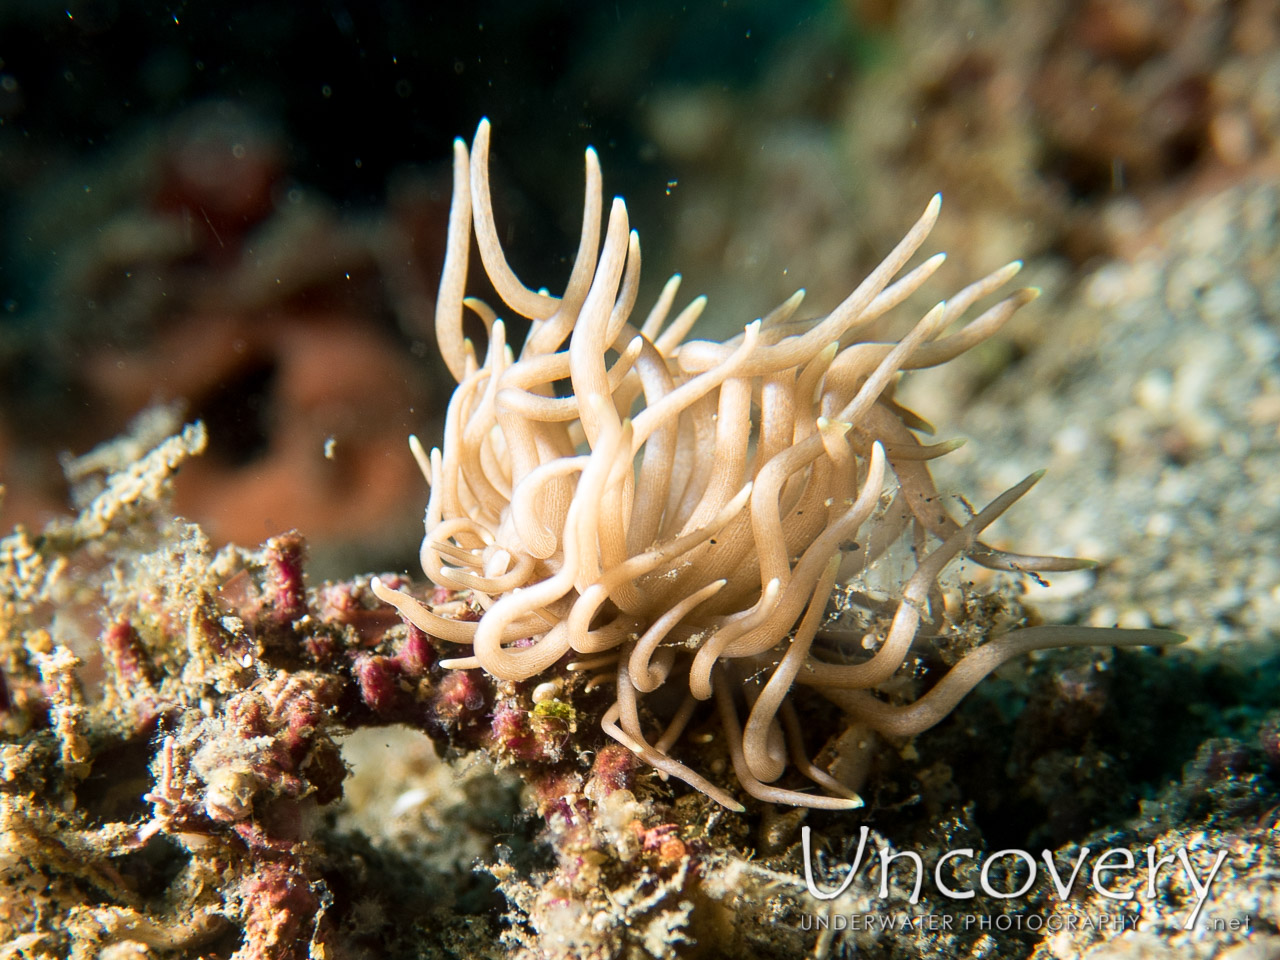 Nudibranch shot in Indonesia|North Sulawesi|Lembeh Strait|Nudi Retreat